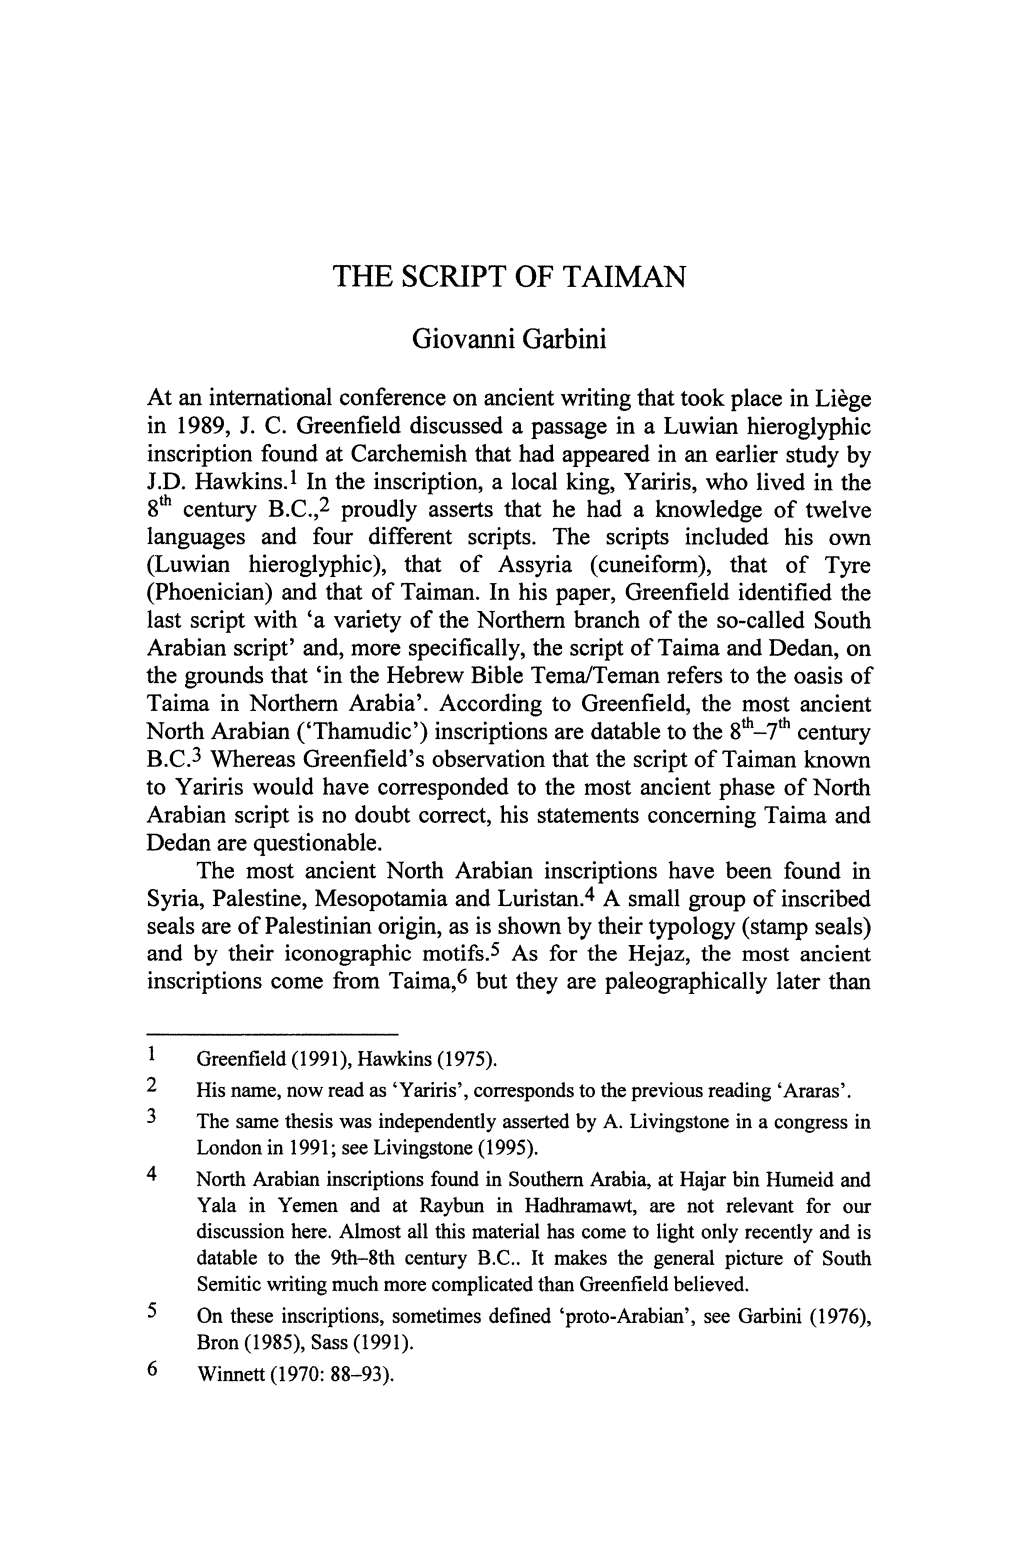 THE SCRIPT of Talman